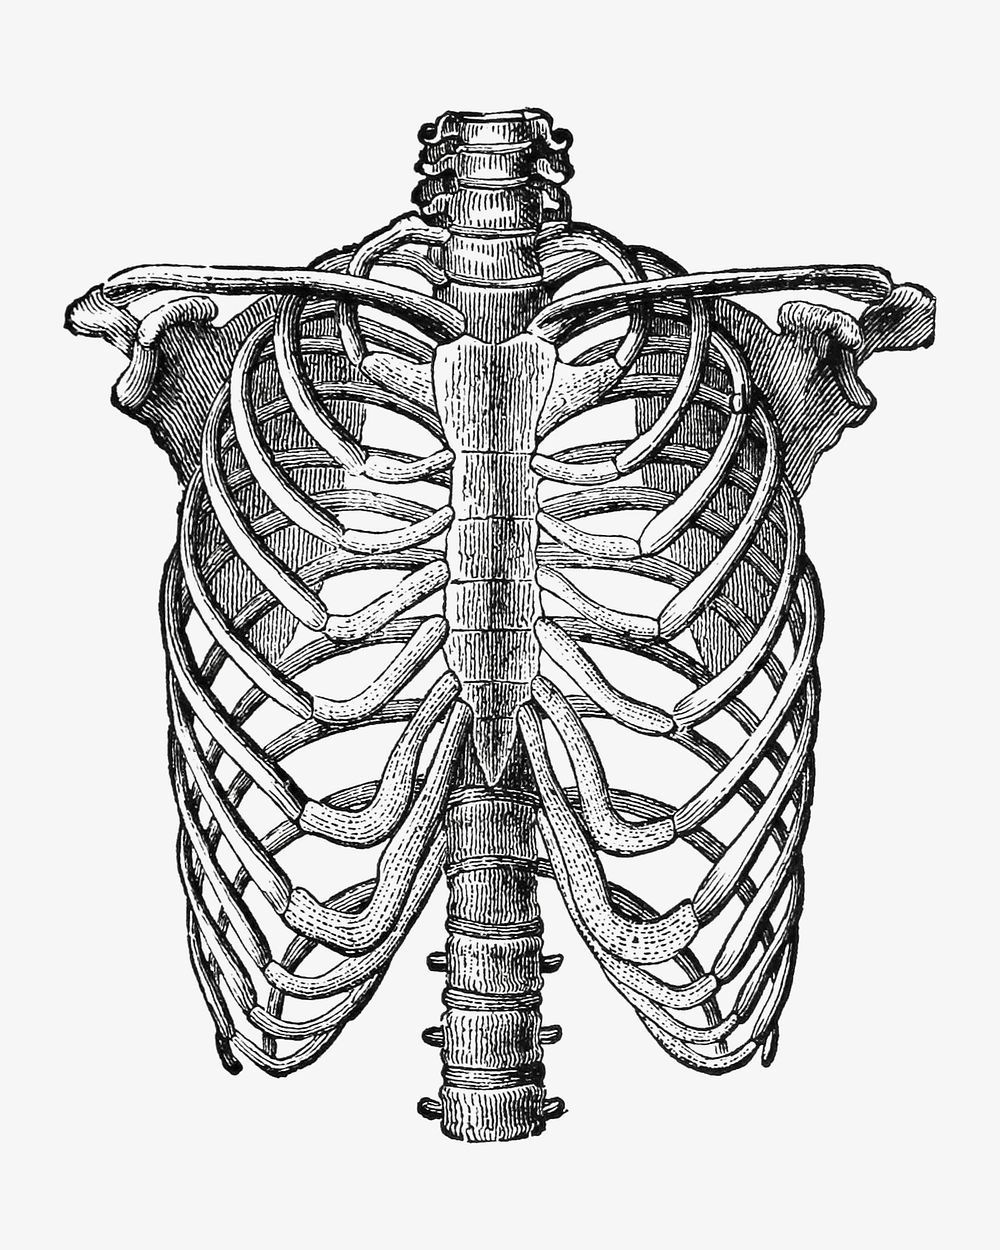 Human lungs anatomy, vintage bone illustration. Remixed by rawpixel.